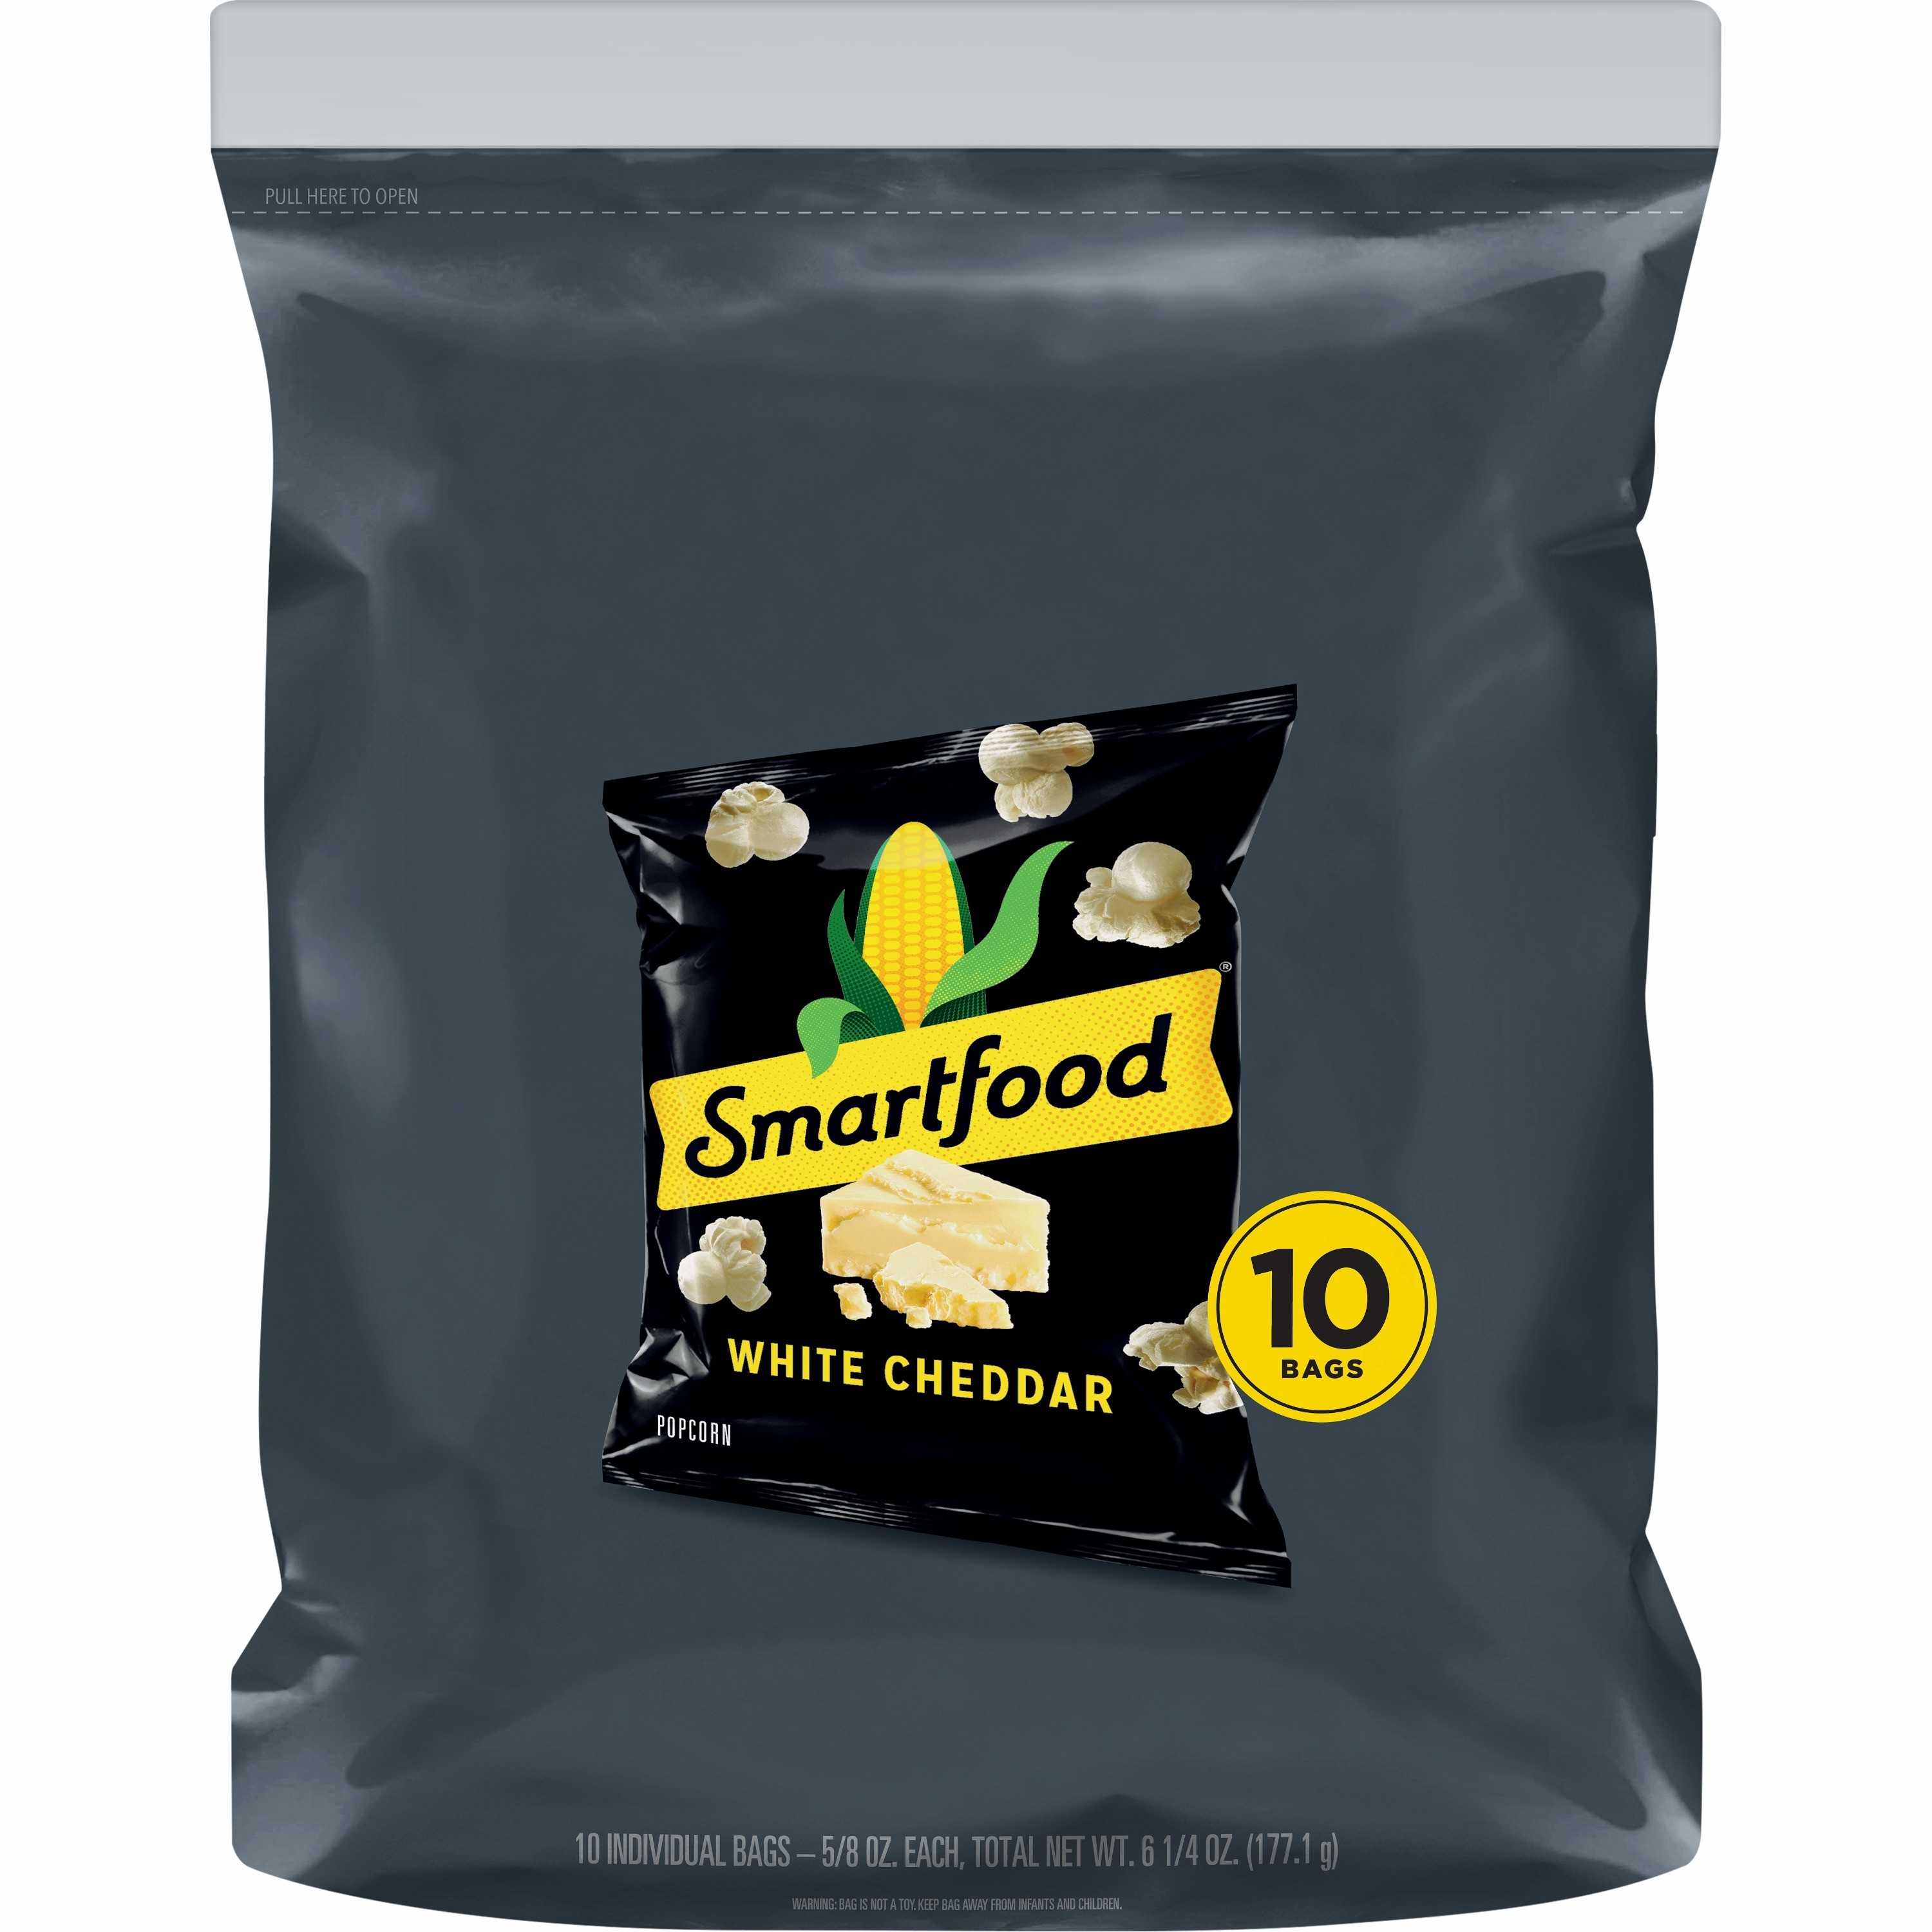 Smartfood White Cheddar Popcorn, 0.625 oz Bags, 10 Count